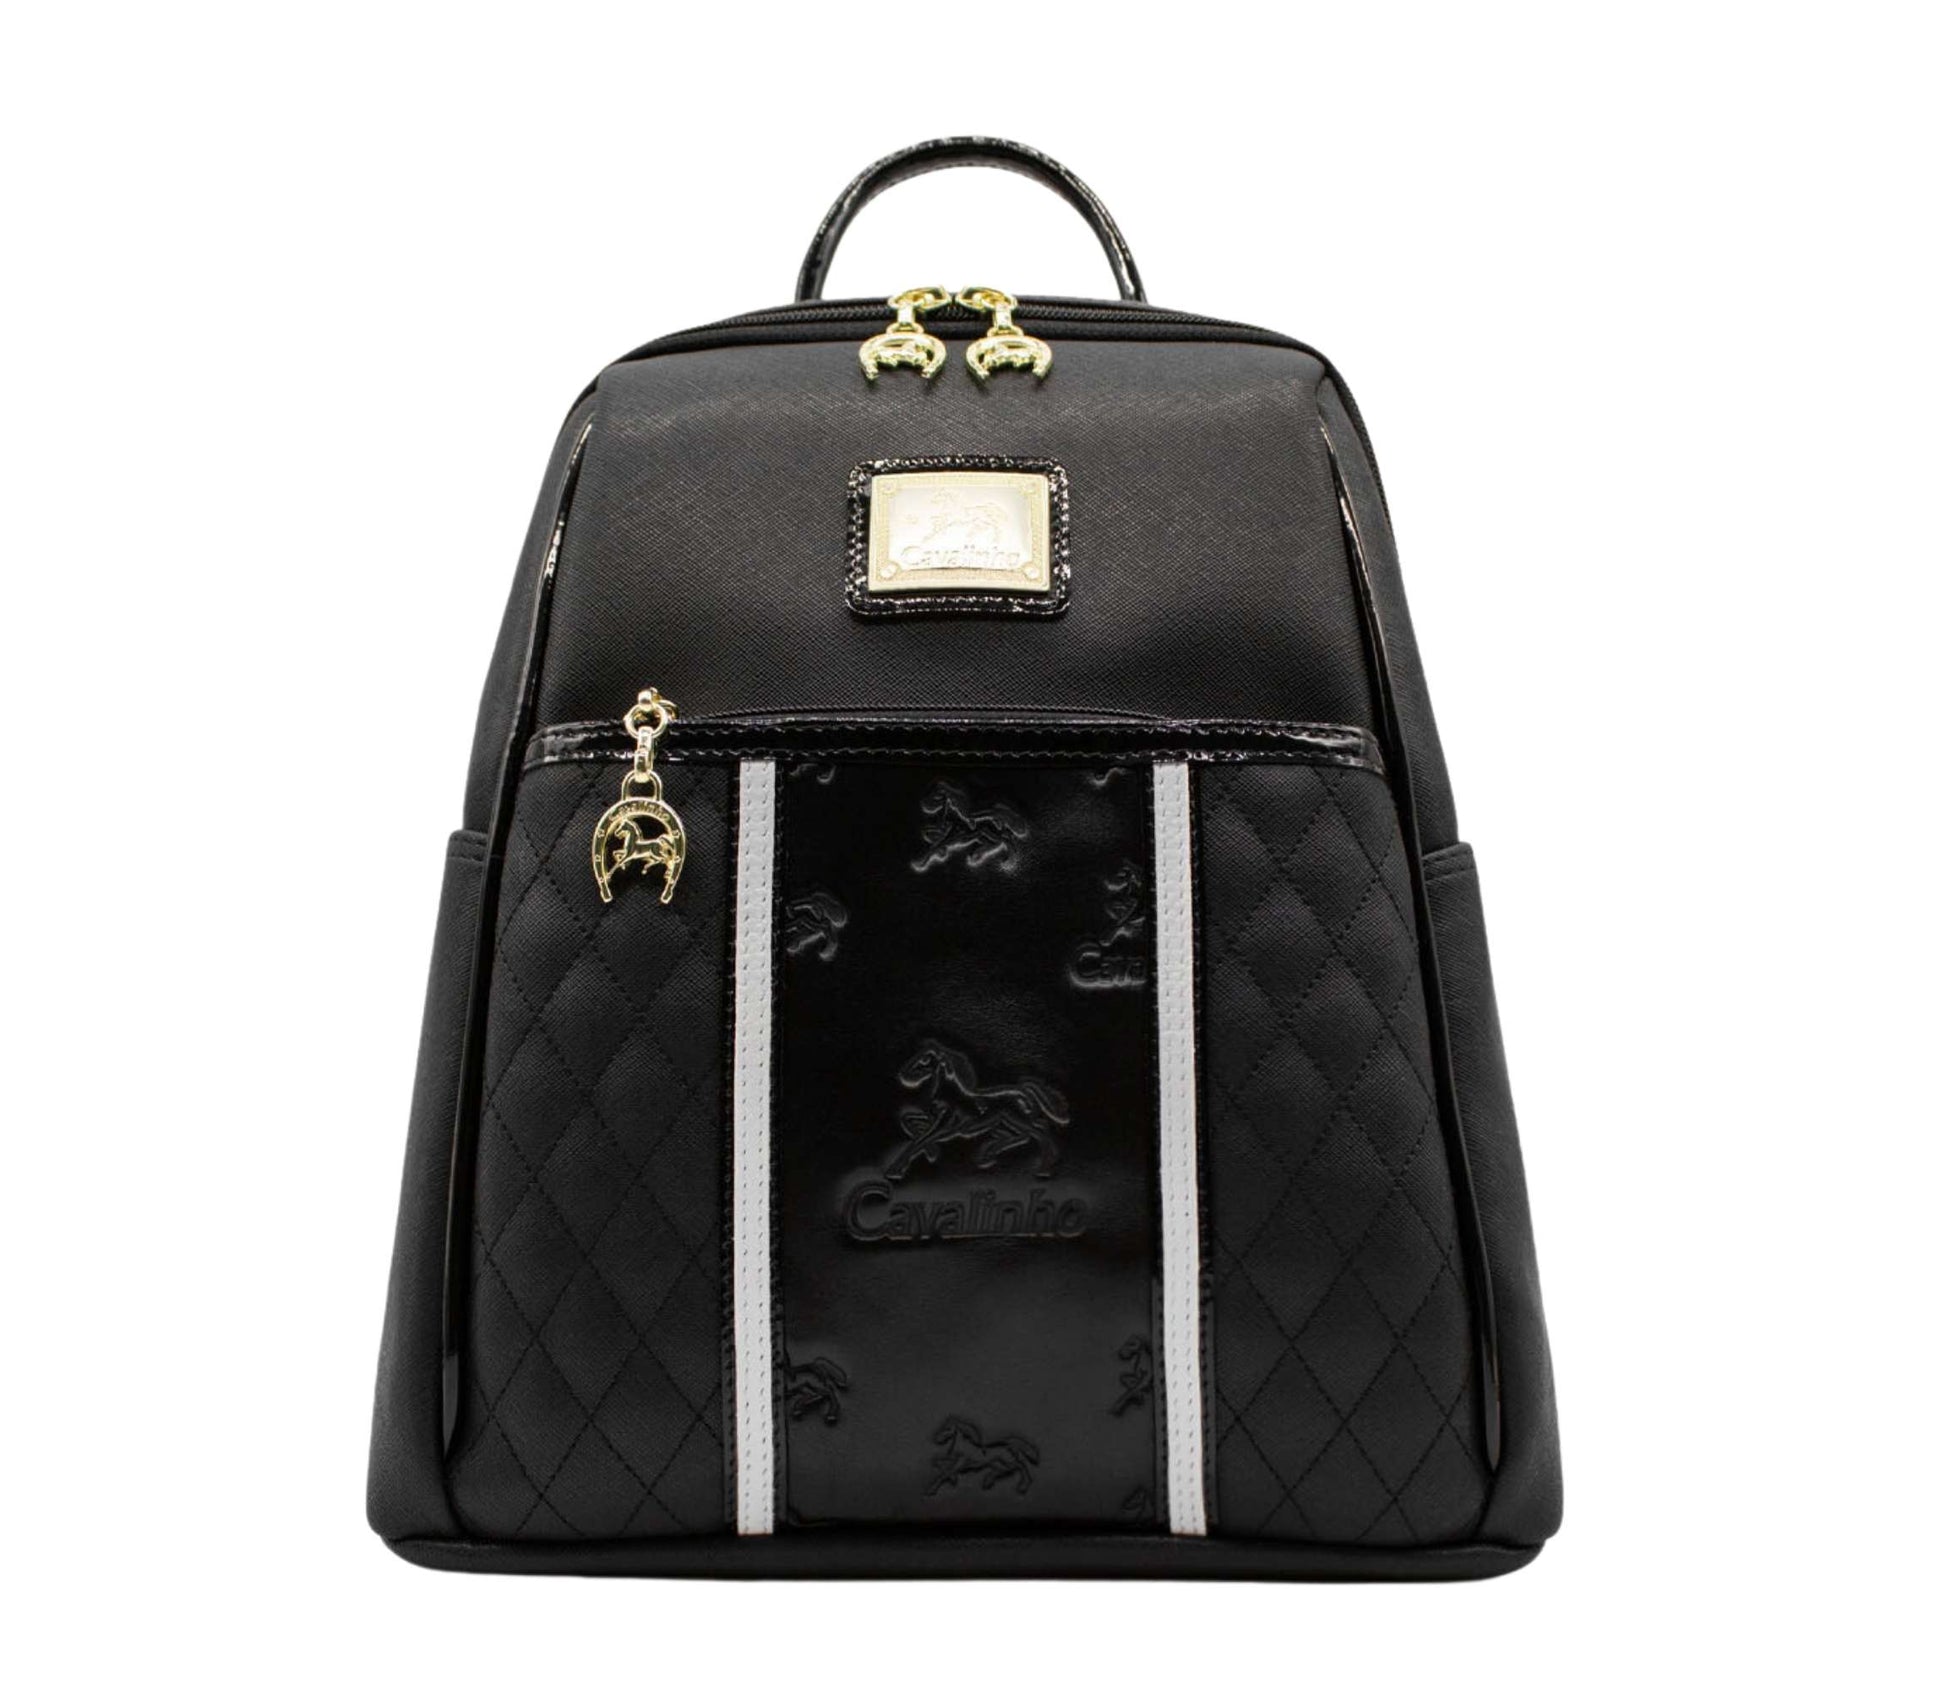 Cavalinho Royal Backpack - Black and White - 18390249.21.99